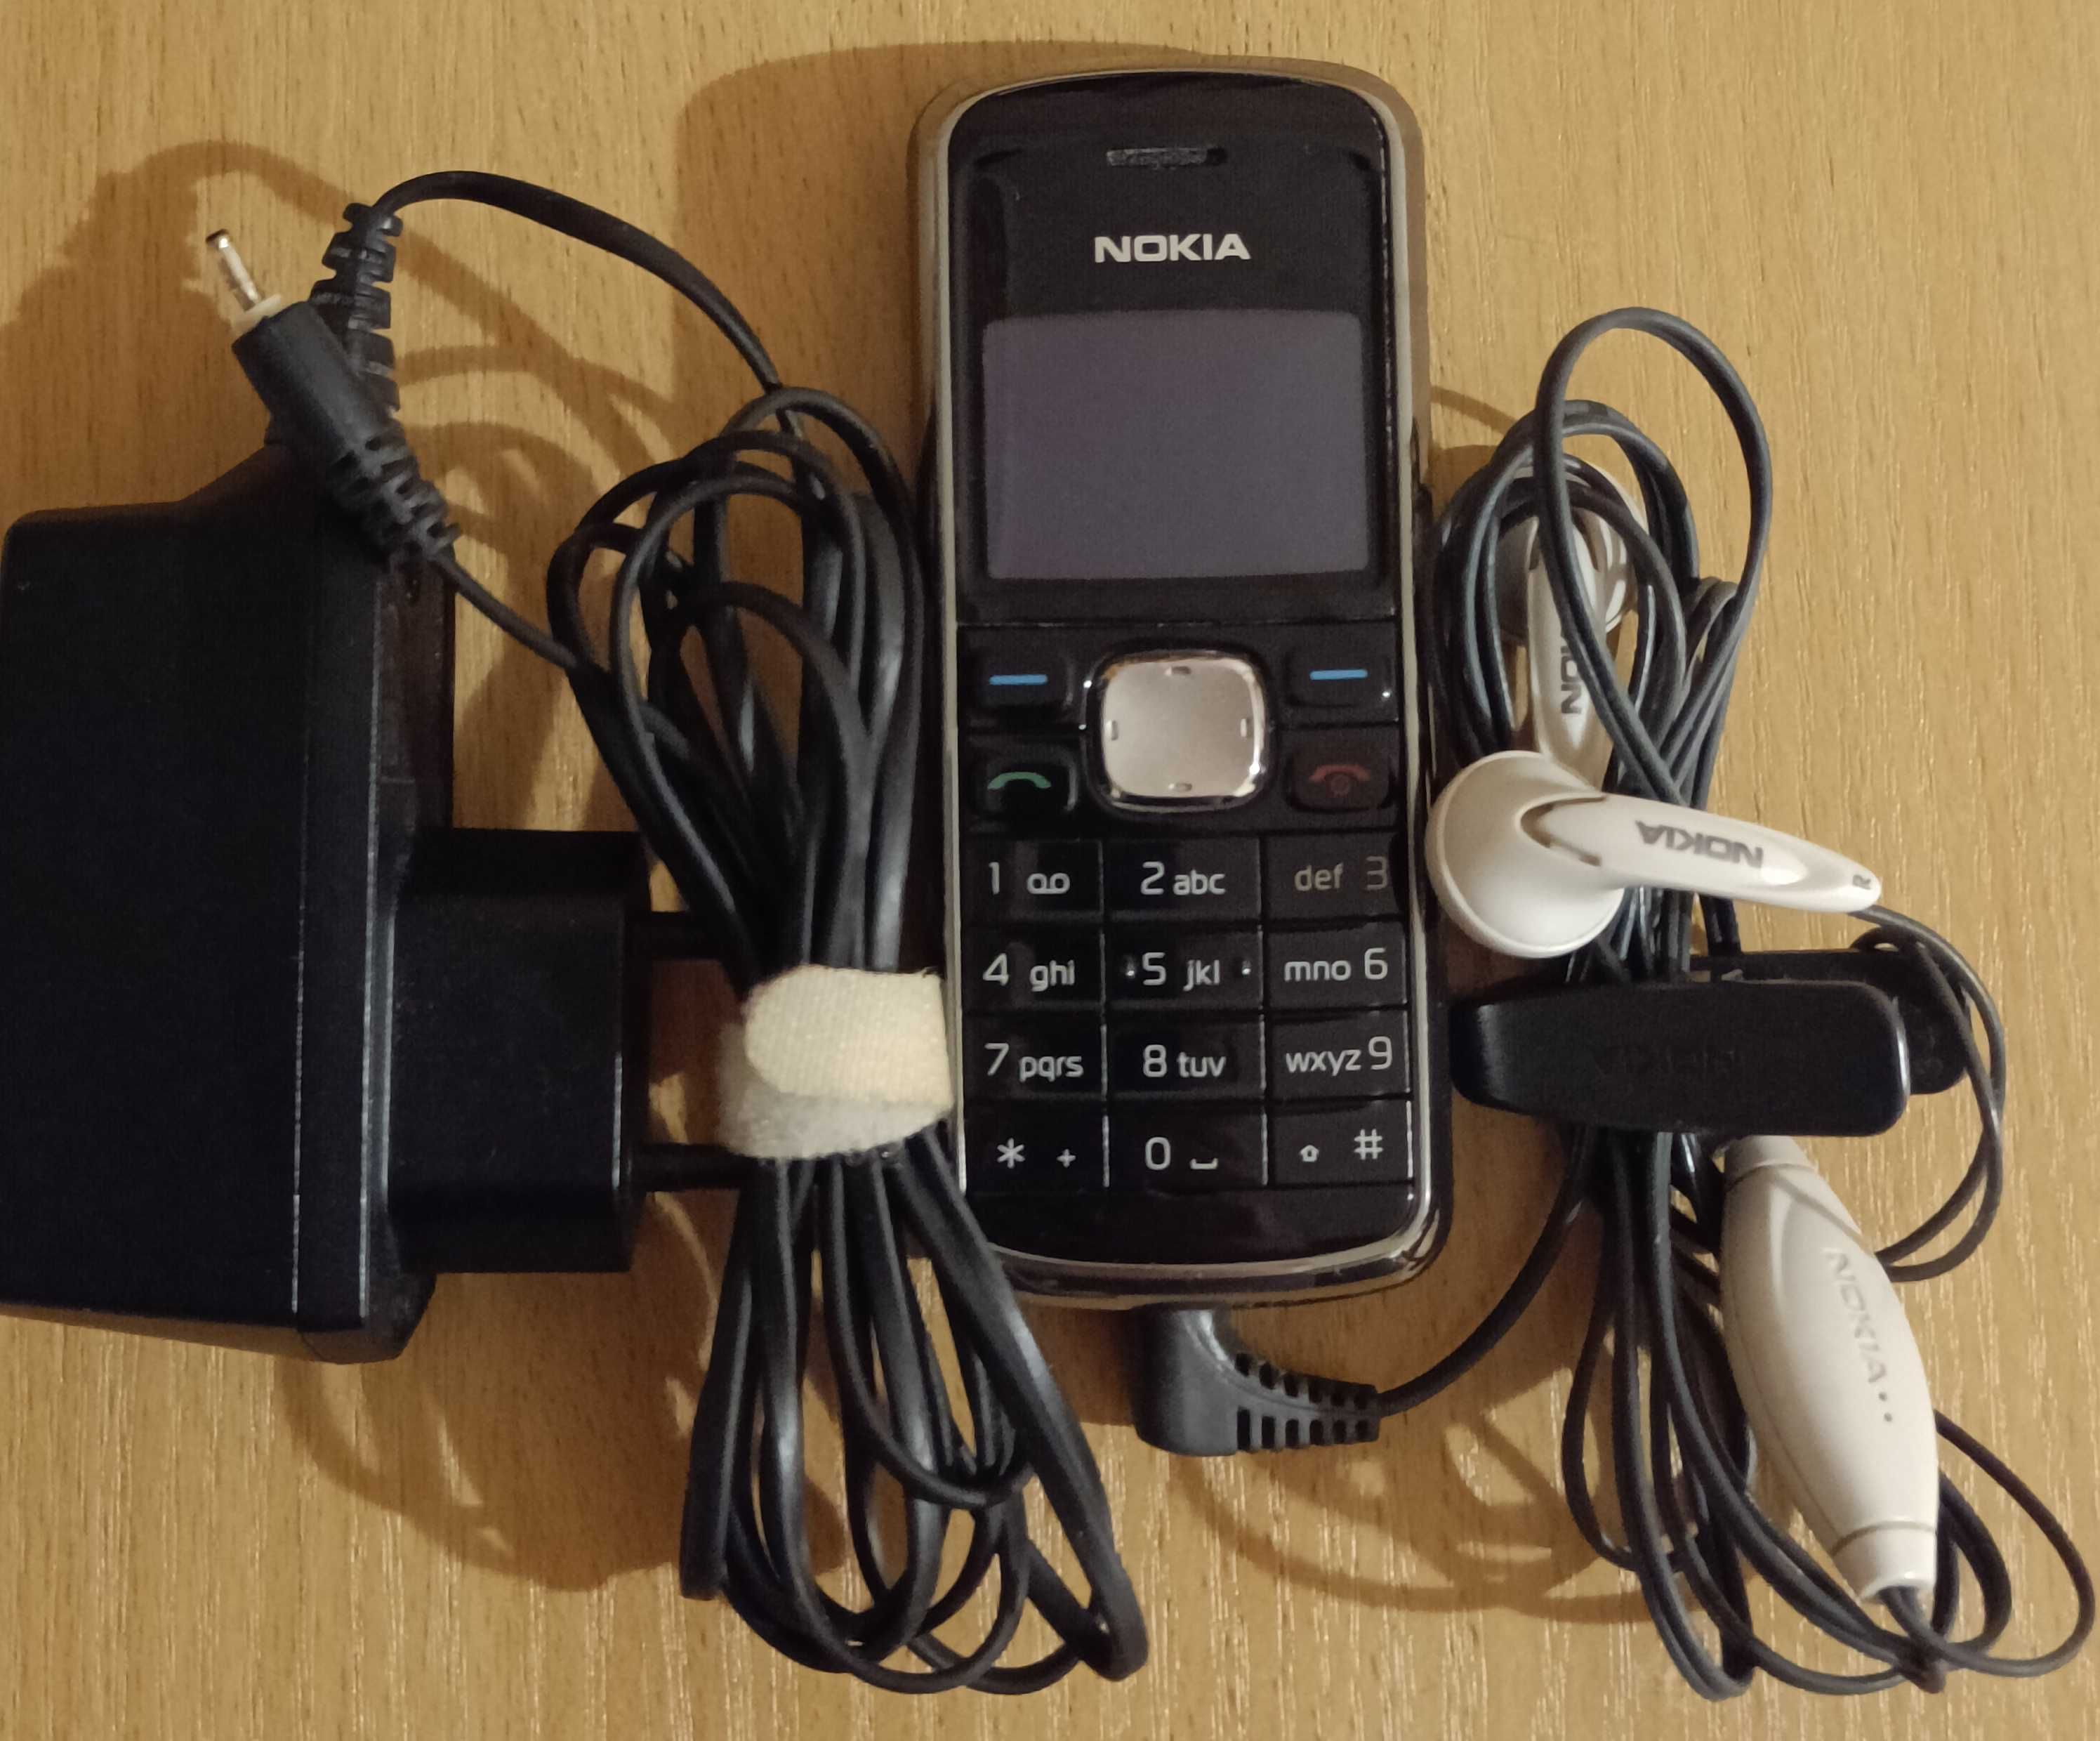 Nokia 2135 CDMA phone